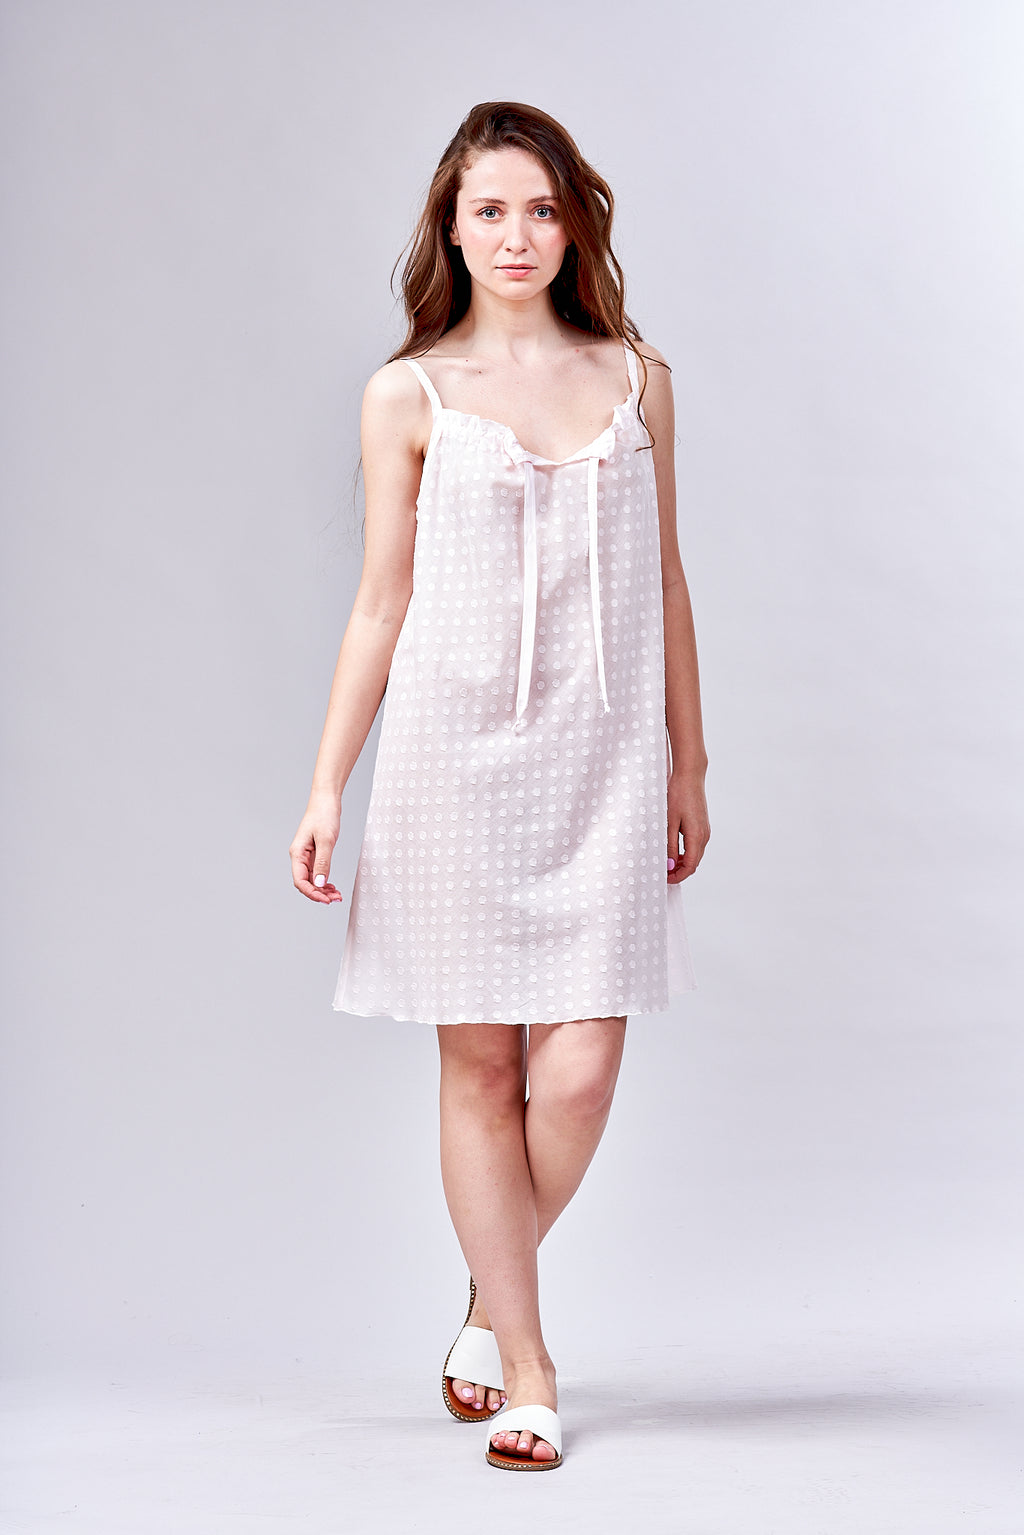 Priamo: US Made Luxury Nightgowns, Robes, & Pajamas for Women & Men –  Priamo Enterprises Inc